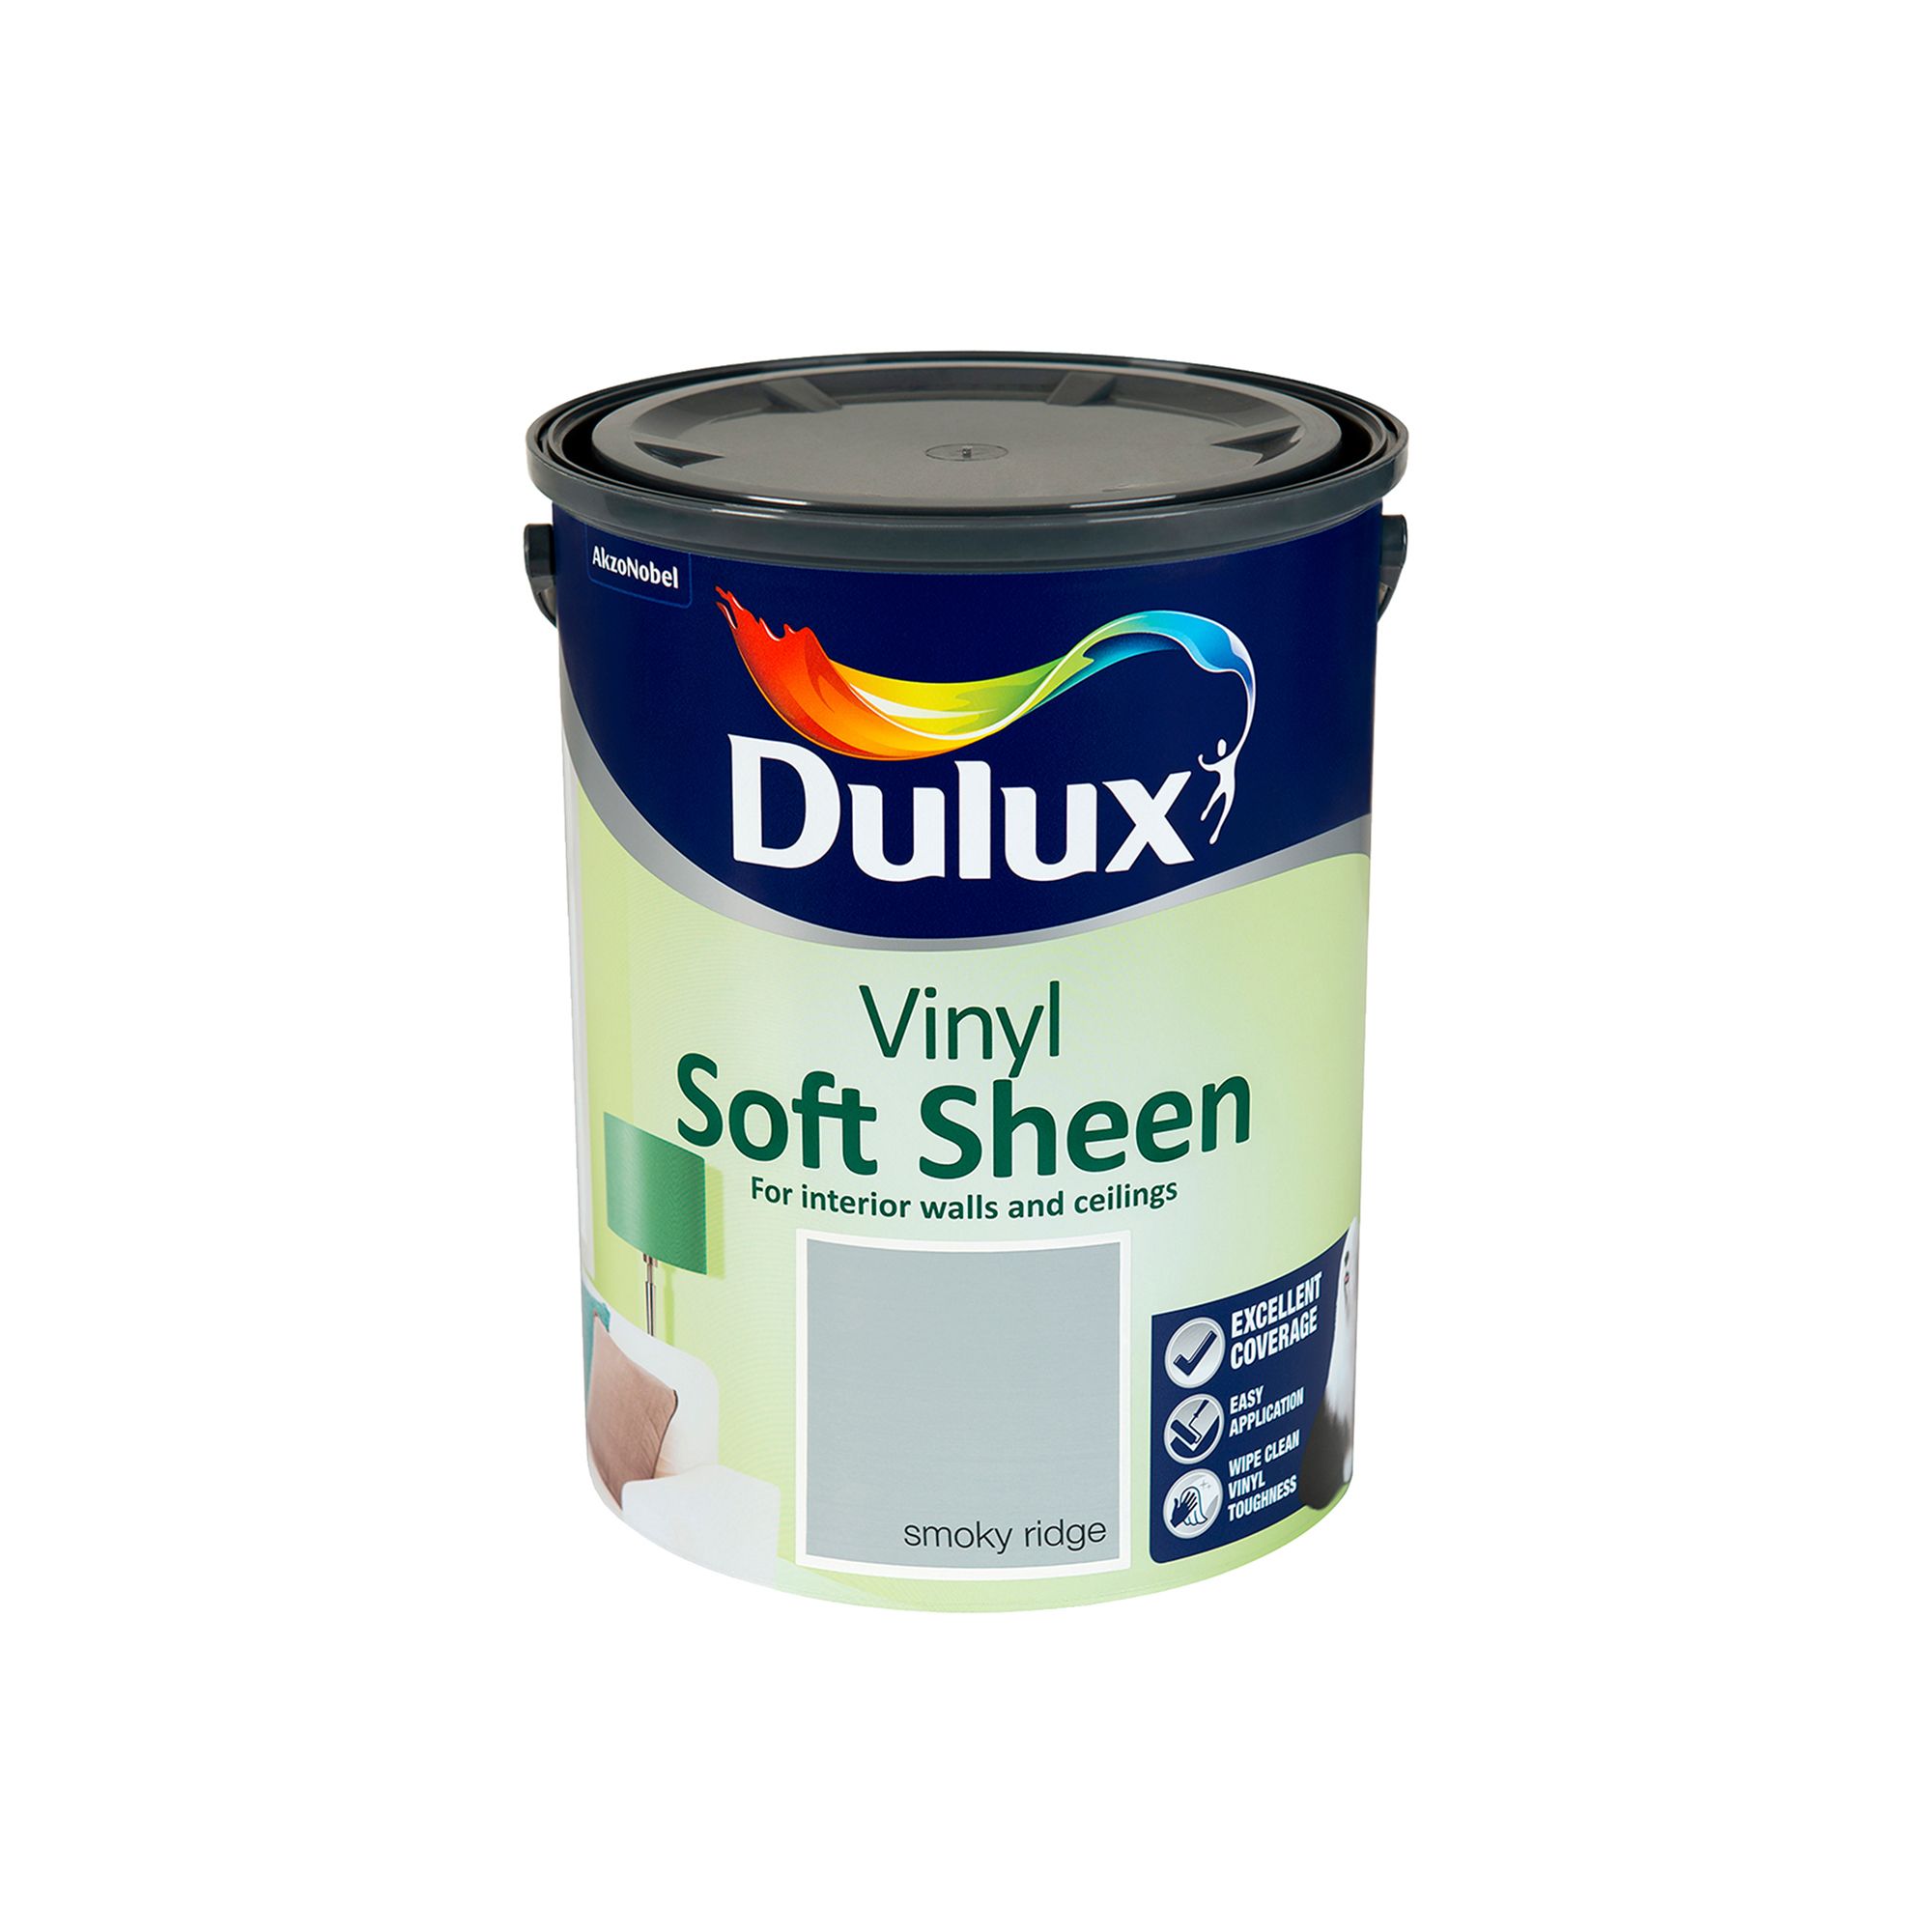 Dulux Smoky ridge Soft sheen Emulsion paint, 5L